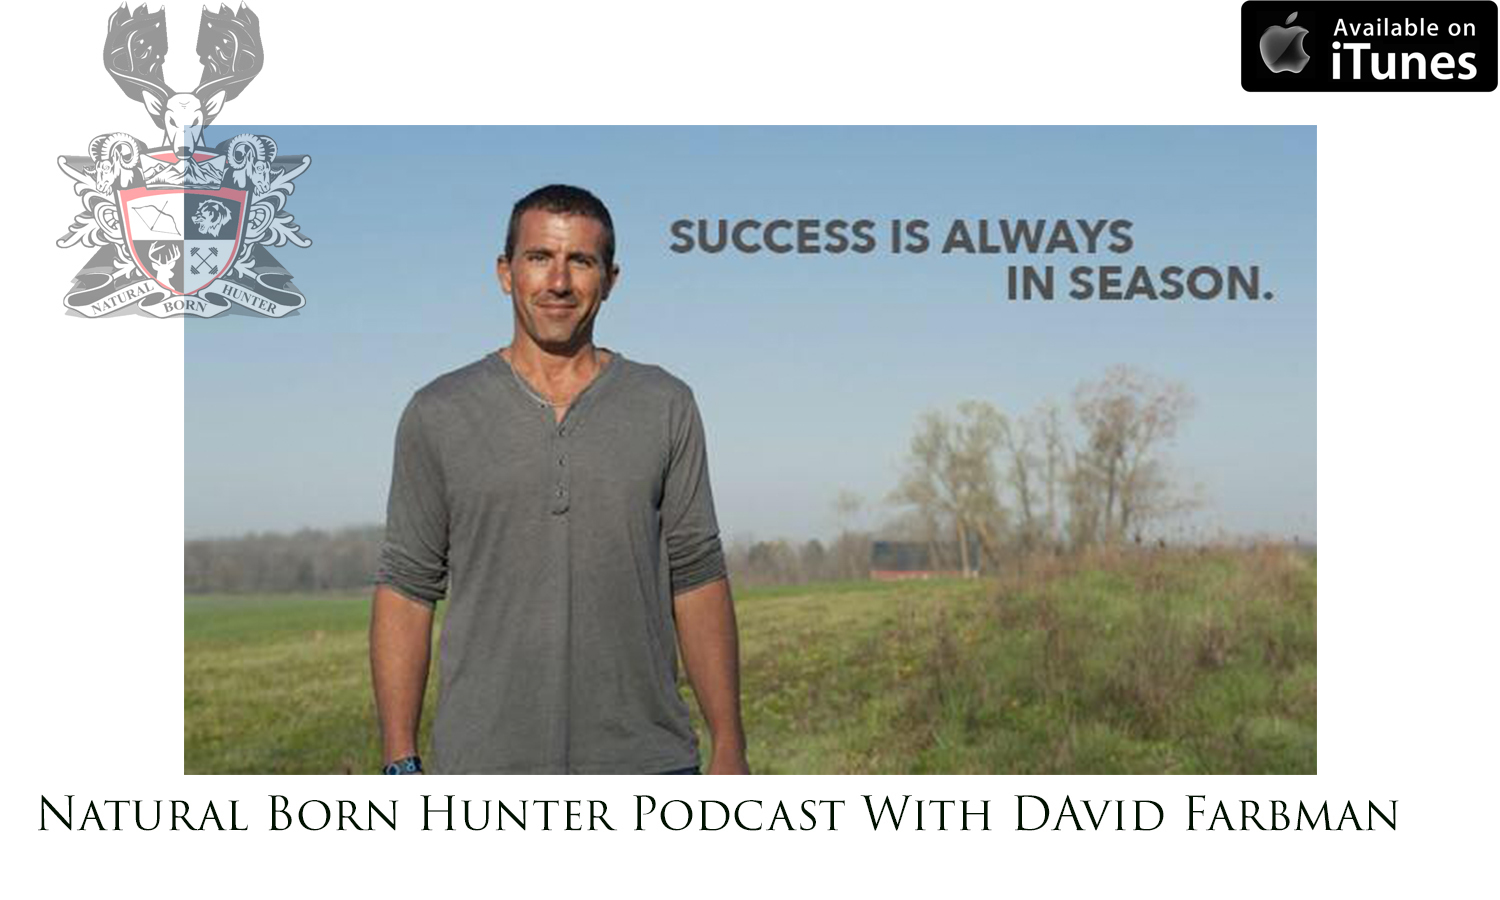 David Farbman - Founder of Carbon TV - Natural Born Hunter Podcast